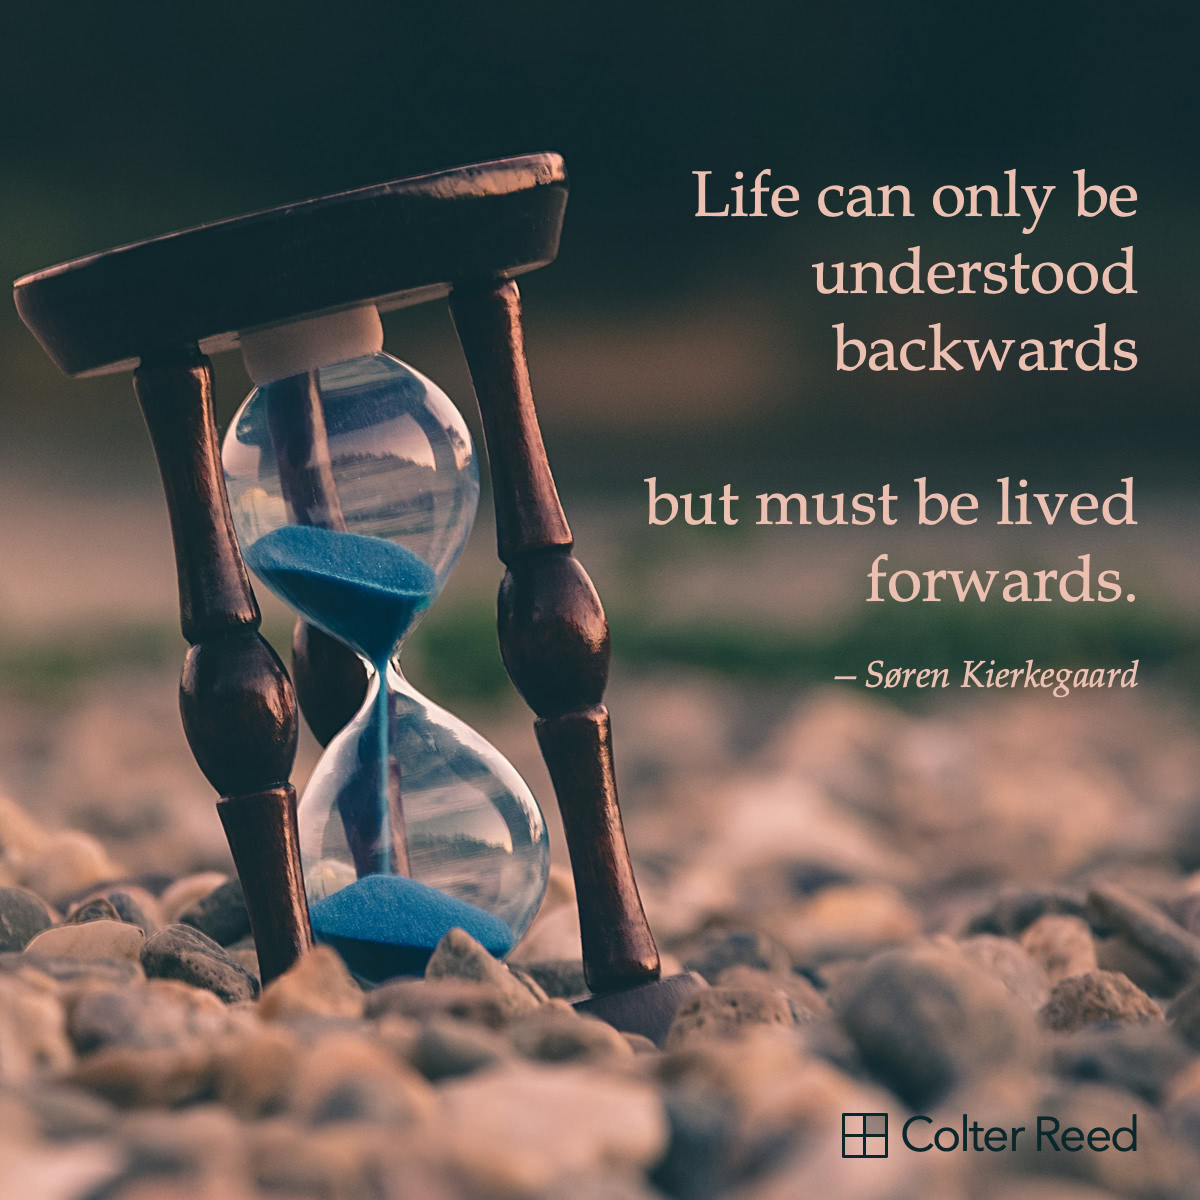 Life can only be understood backwards but must be lived forwards. —Søren Kierkegaard